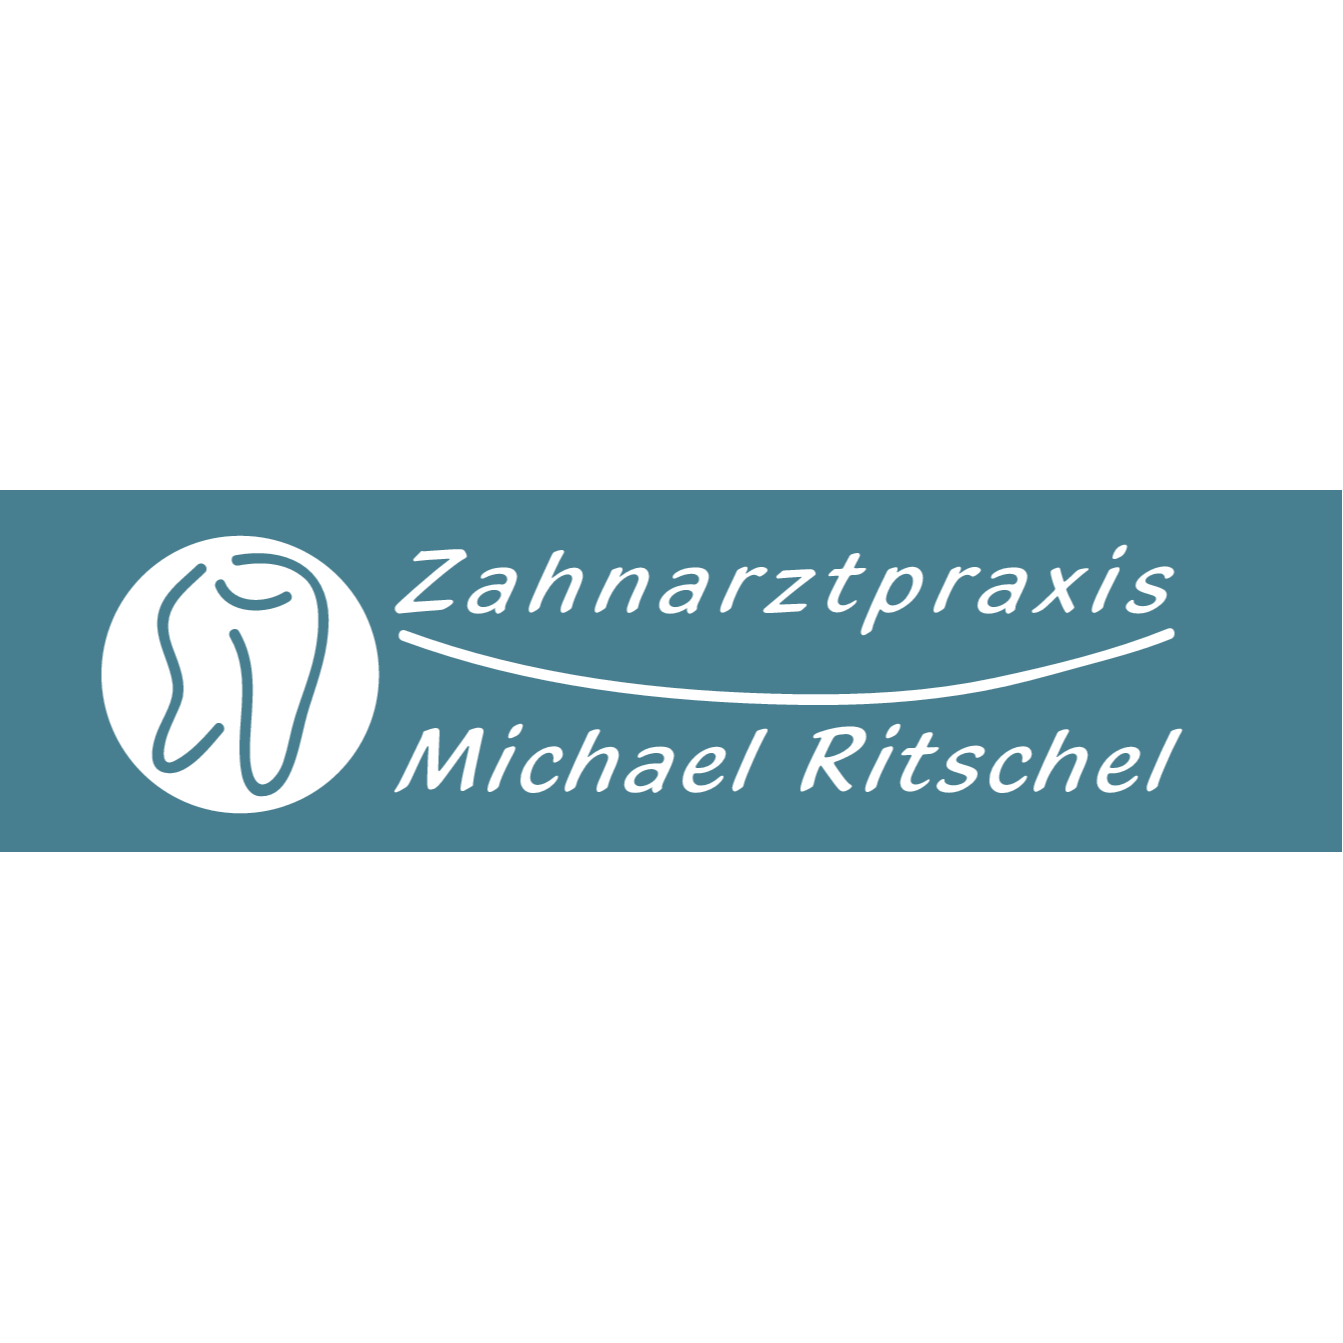 Michael Ritschel Zahnarzt in Neuss - Logo